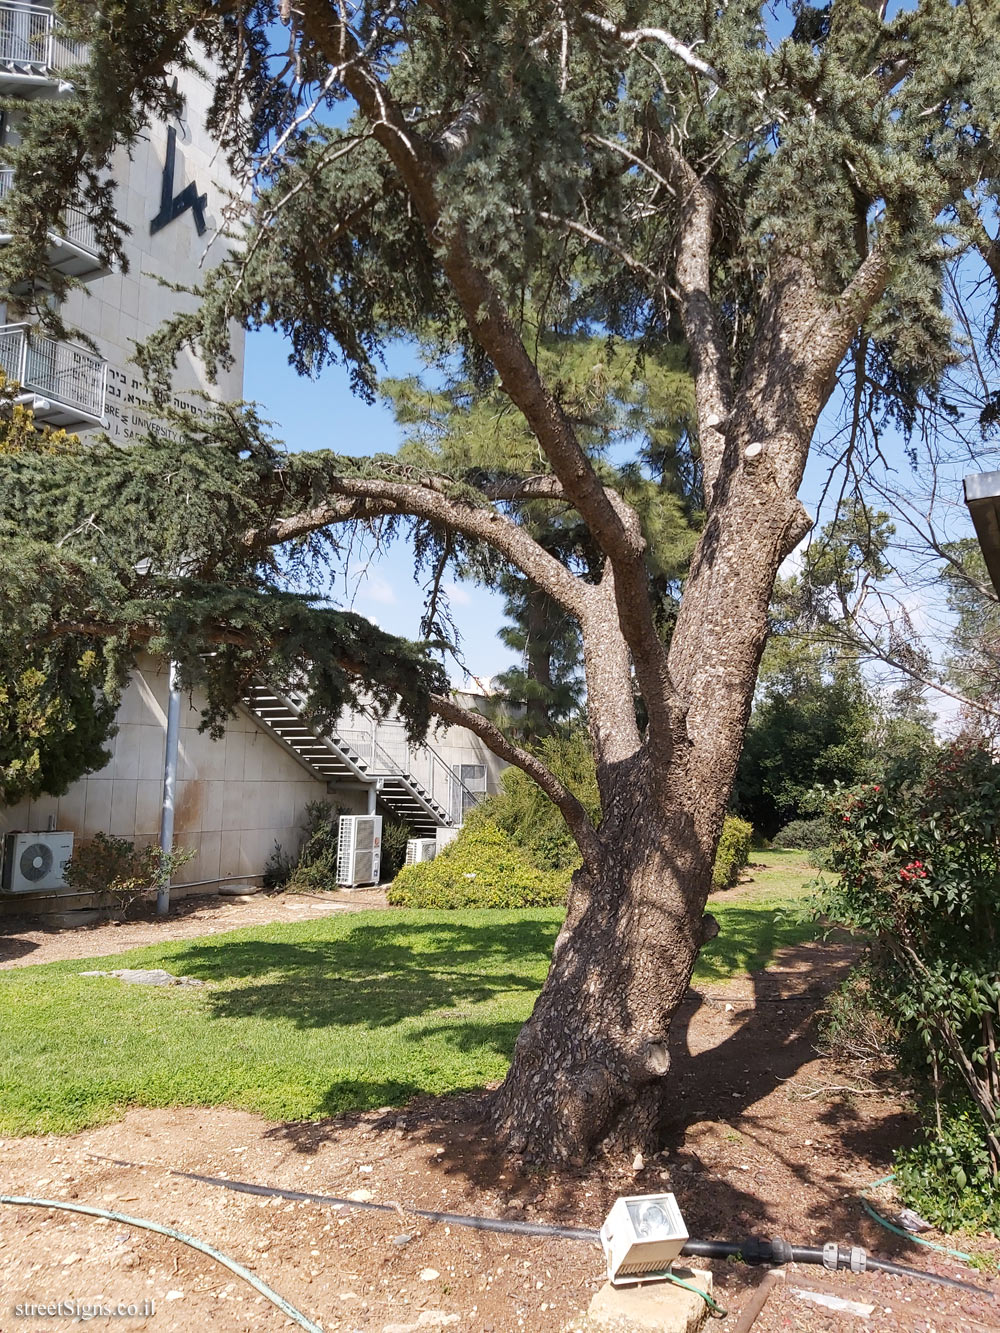 The Hebrew University of Jerusalem - Discovery Tree Walk - Atlas Cedar - Safra Campus